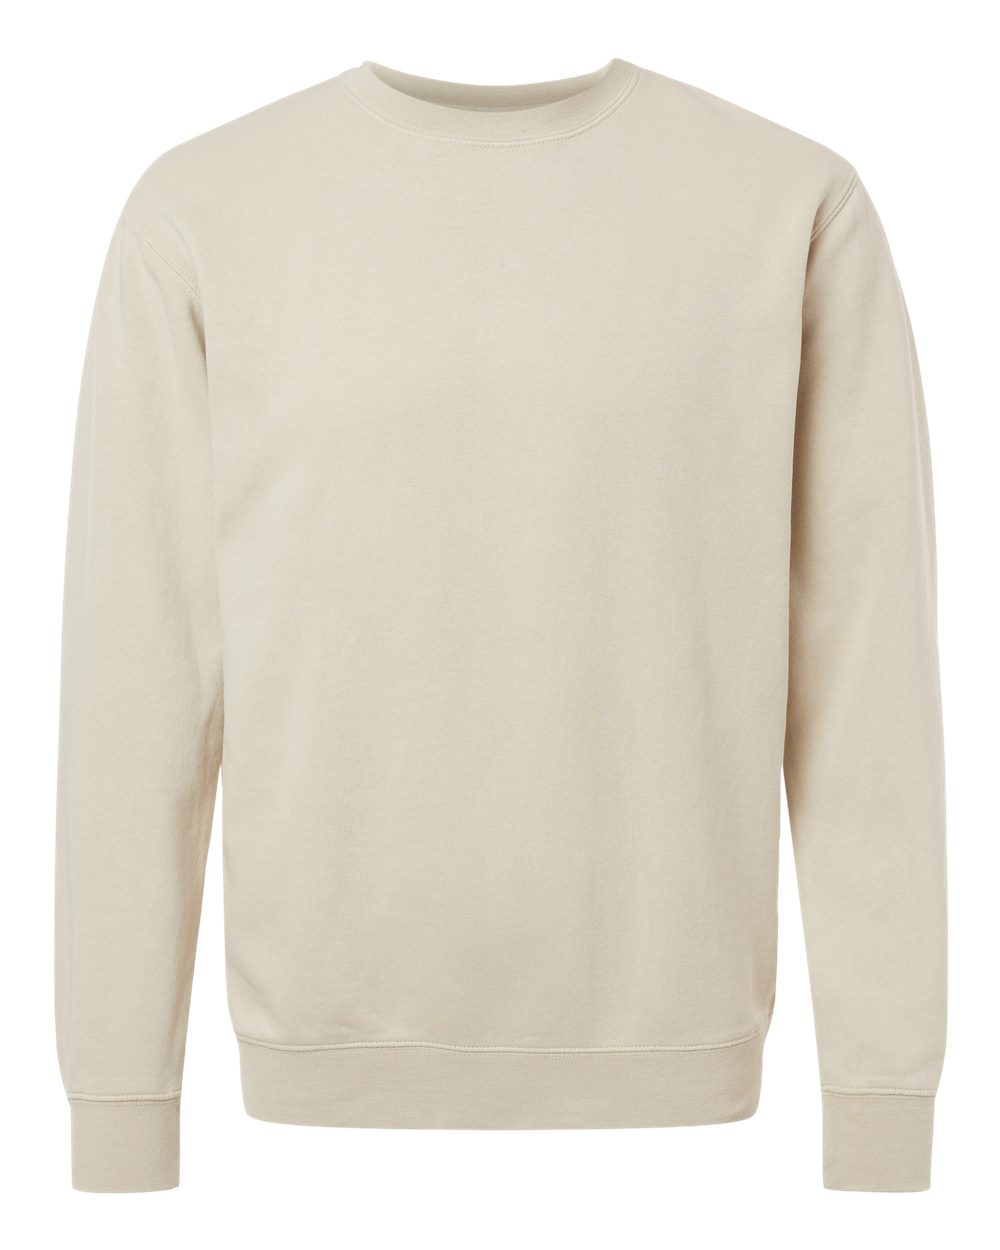 Independent Pigment-Dyed Crewneck Sweatshirt (PRM3500) in Pigment Ivory